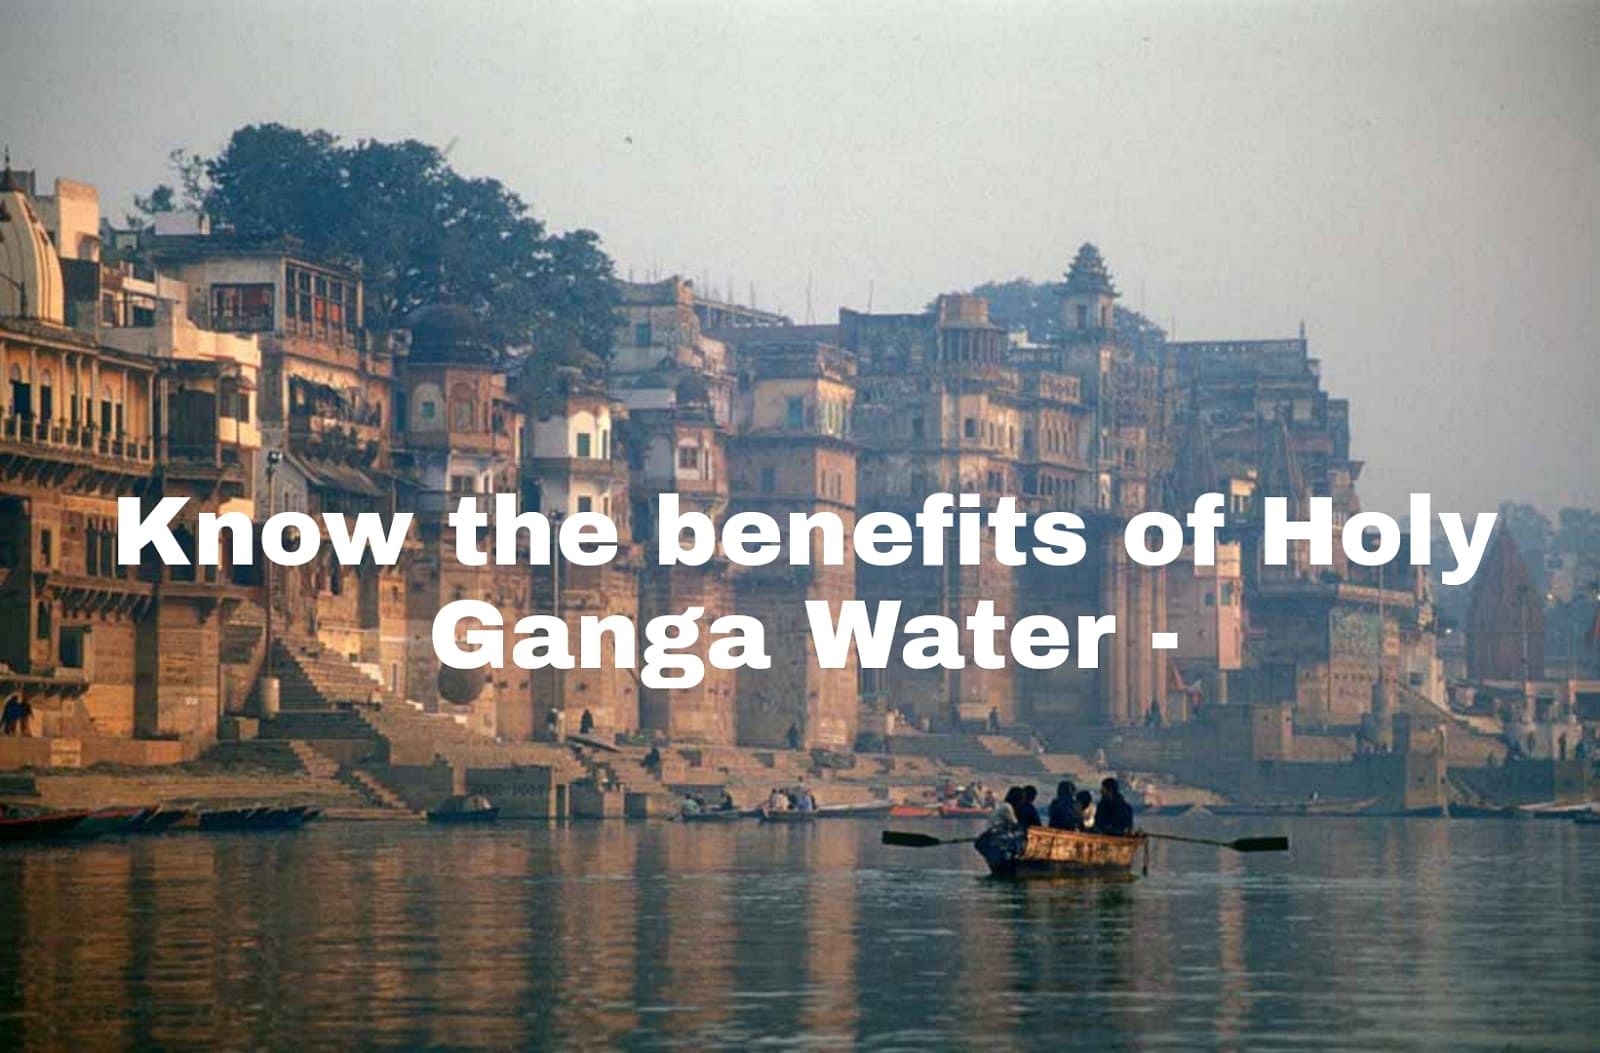 Holy Ganga Water